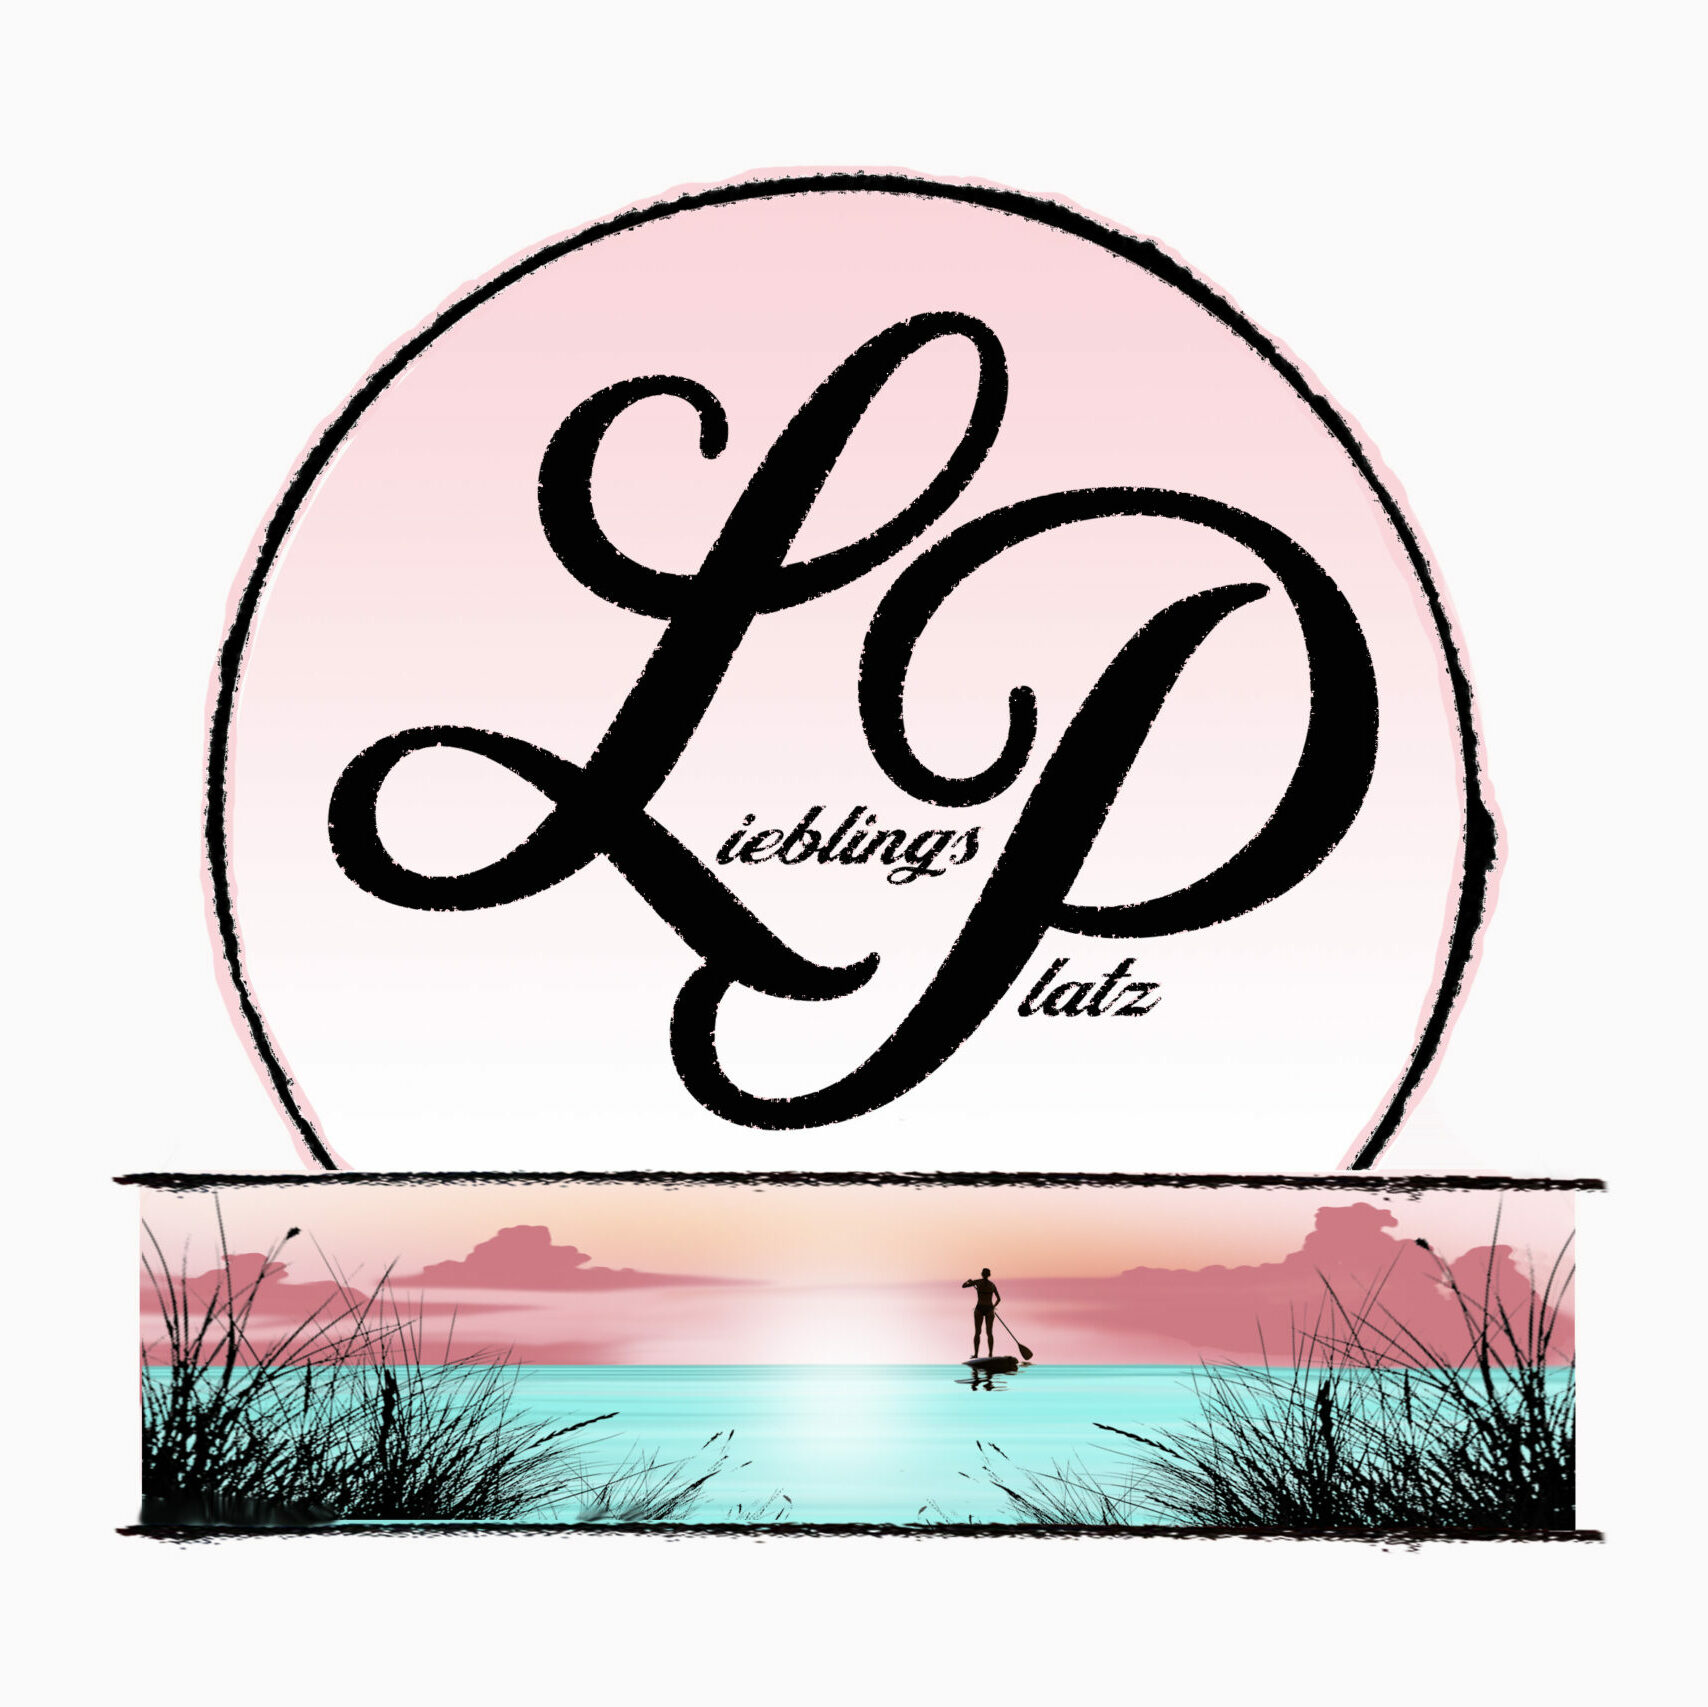 cropped-Logo_Lieblingsplatz-scaled-1.jpg